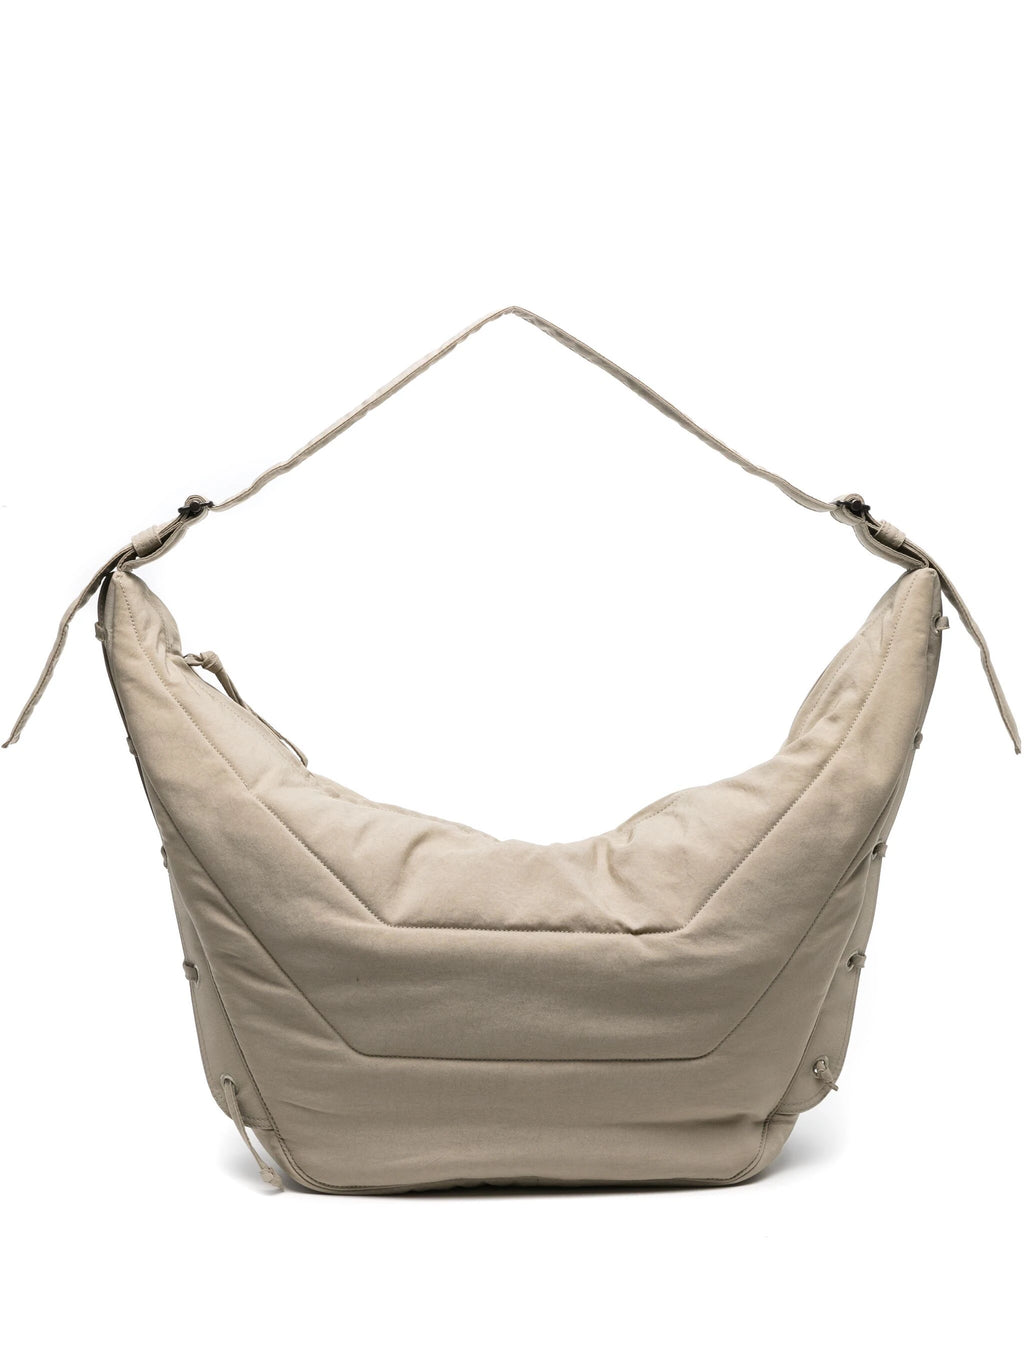 LEMAIRE Unisex Large Soft Game Bag